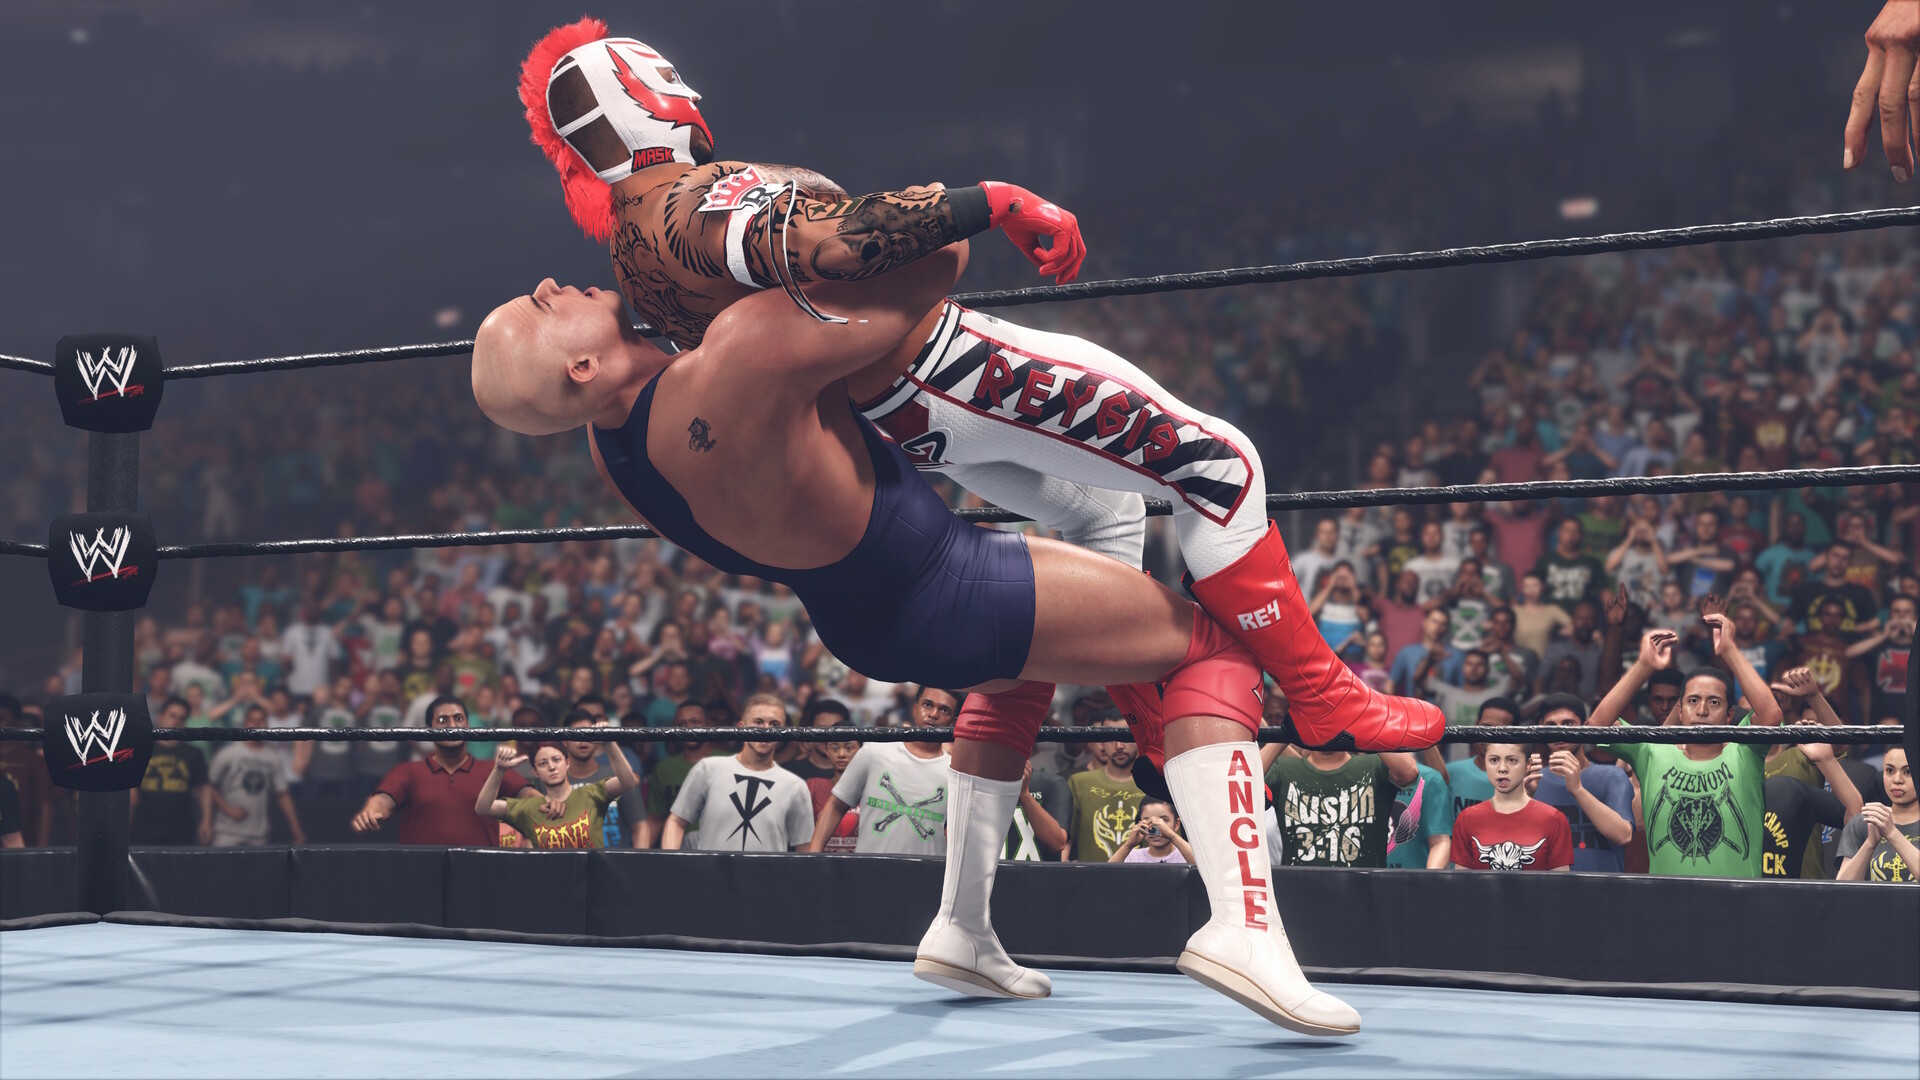 WWE 2K23 Revel With Wyatt Pack on PS5 — price history, screenshots